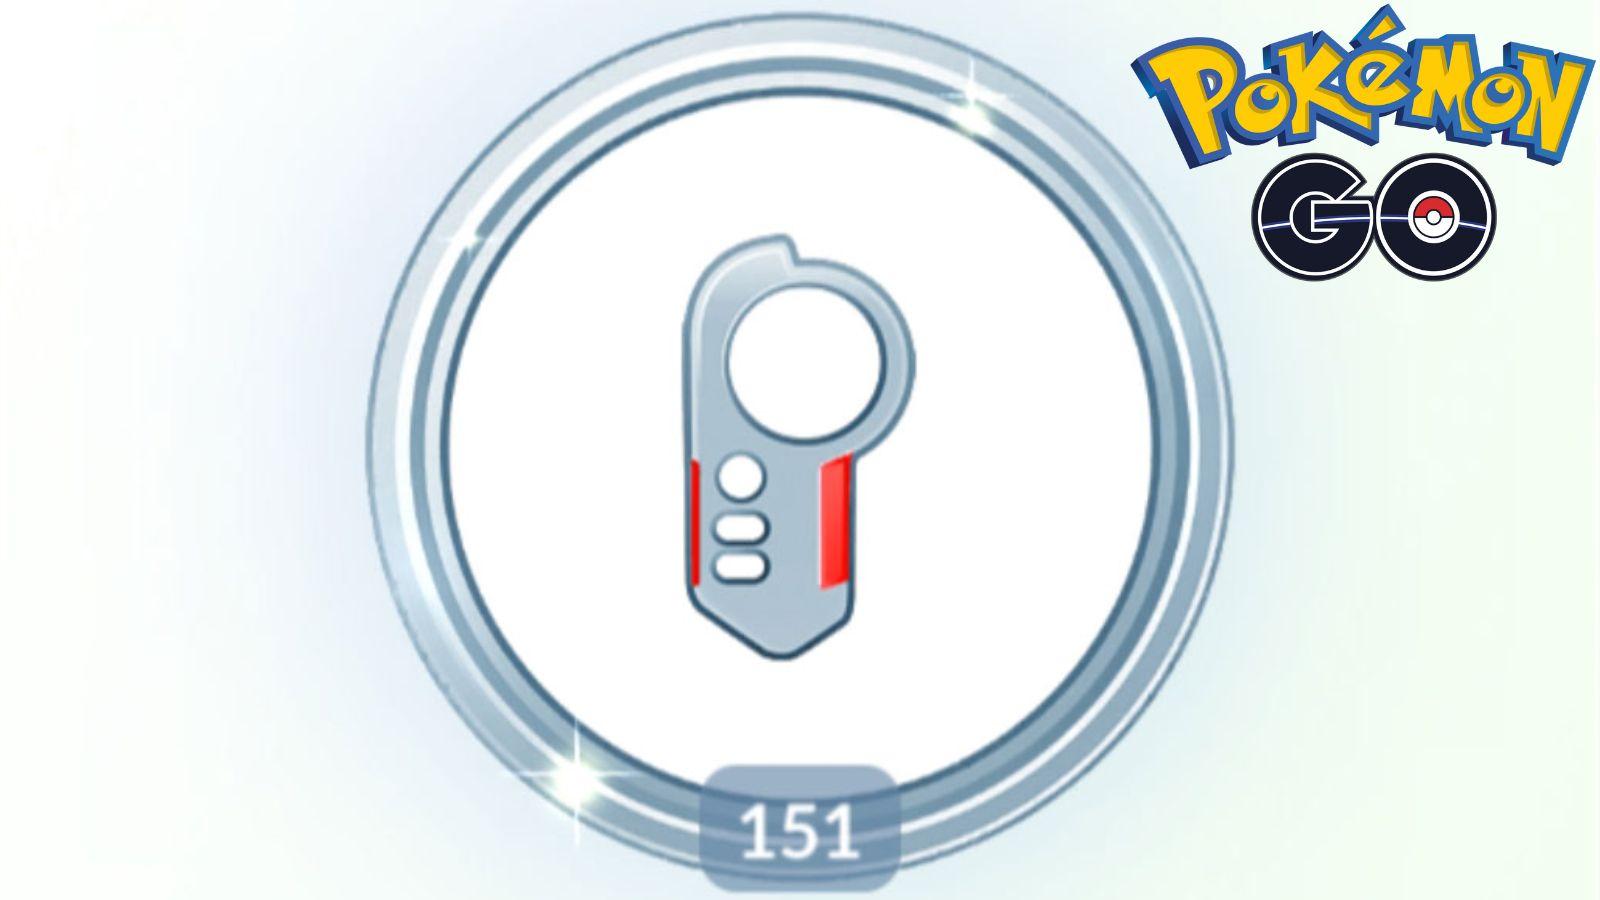 Pokemon Go Platinum Kanto medal